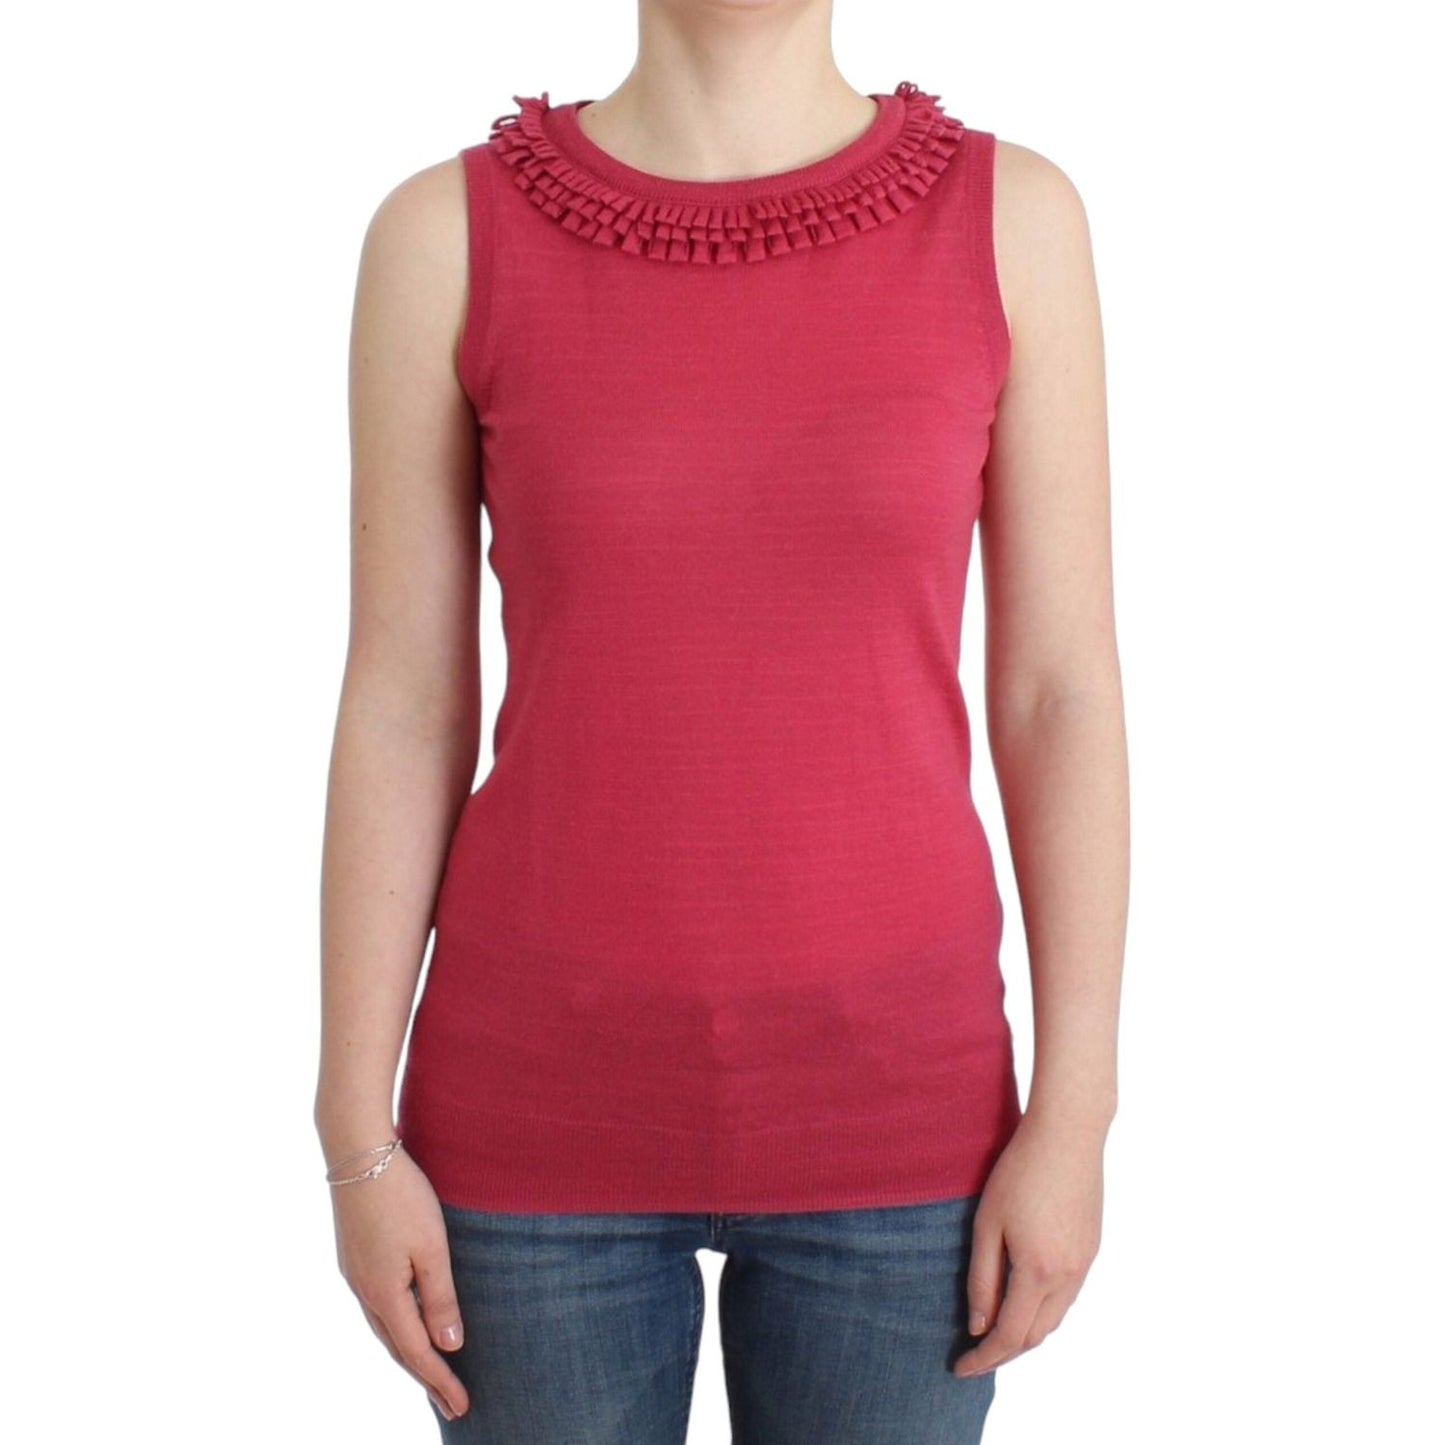 John Galliano Elegant Pink Sleeveless Wool Knit Top pink-wool-knit-top 5456-pink-wool-knit-top-scaled-23eb21df-03e.jpg